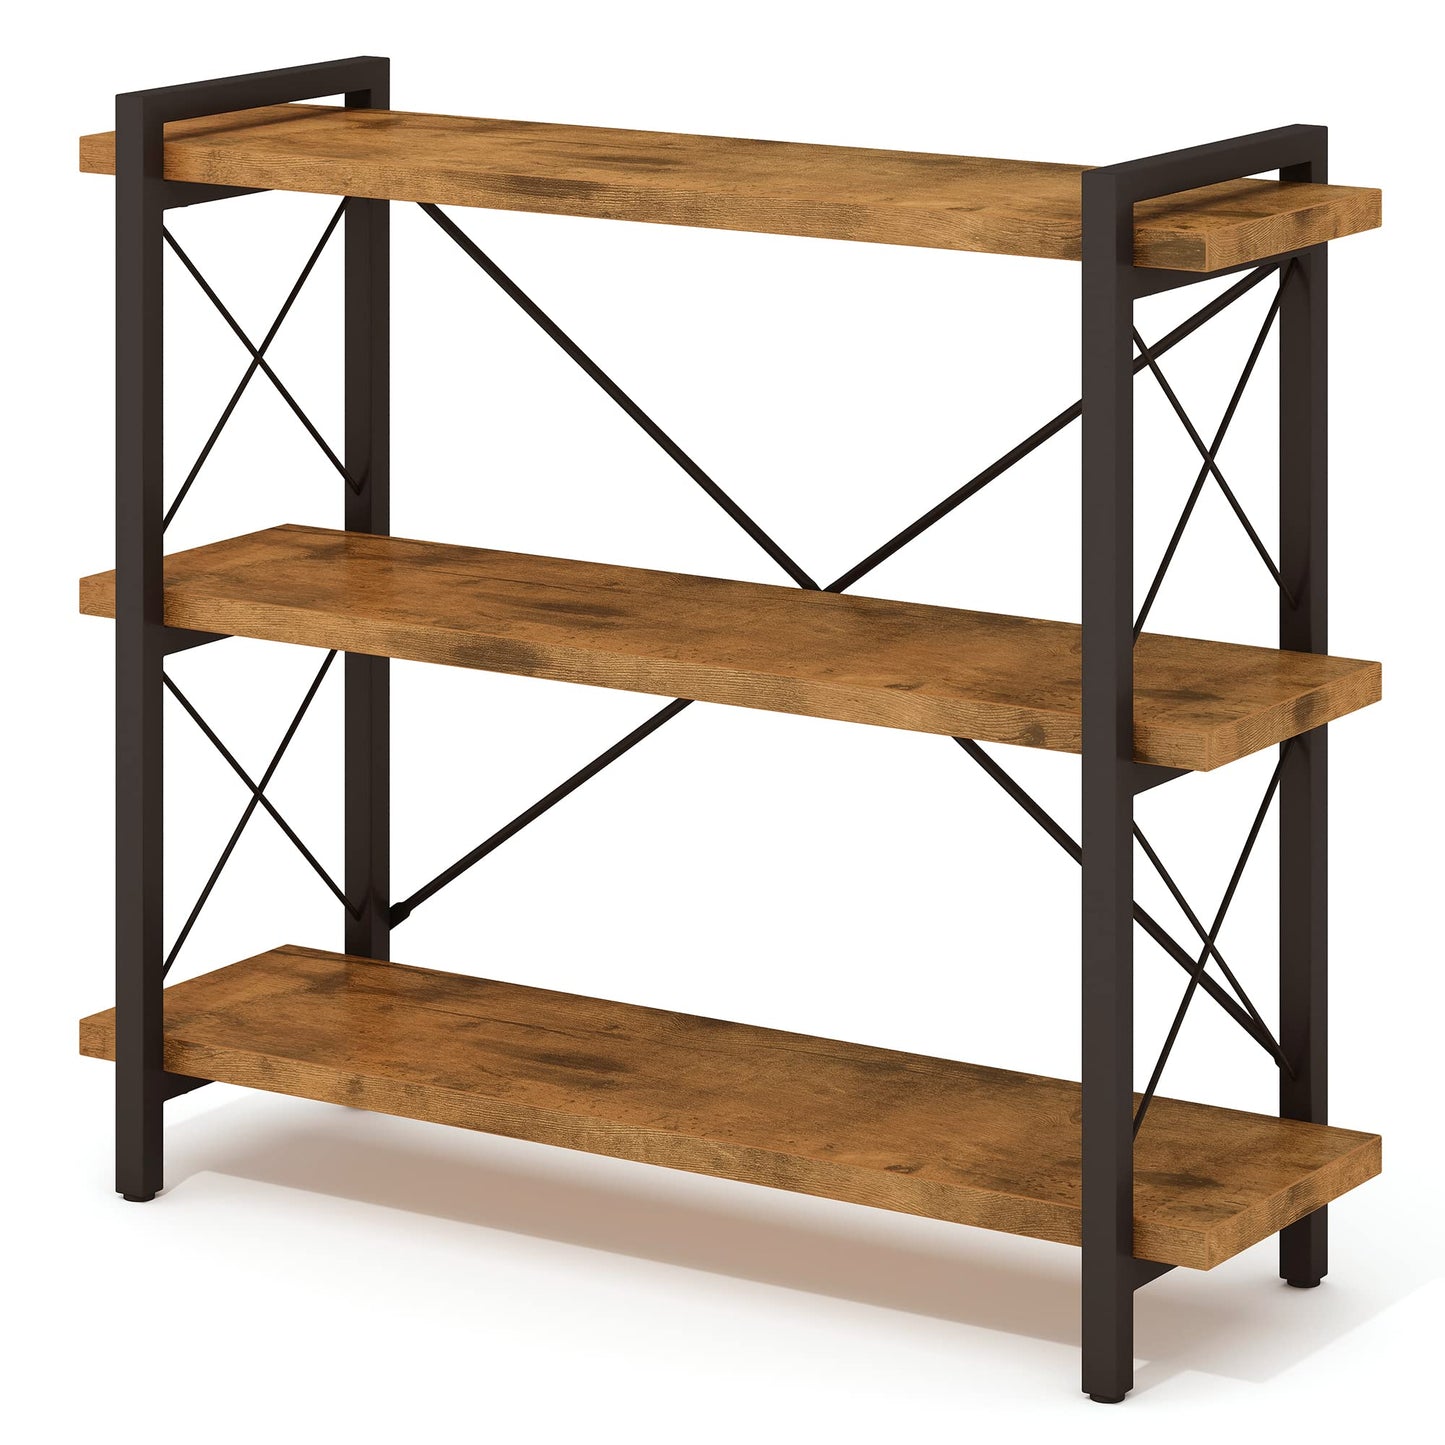 HCHQHS Bookshelf, 3-Tier Industrial Bookcase, Rustic Open Book Shelf, Wood and Metal Horizontal Bookshelves